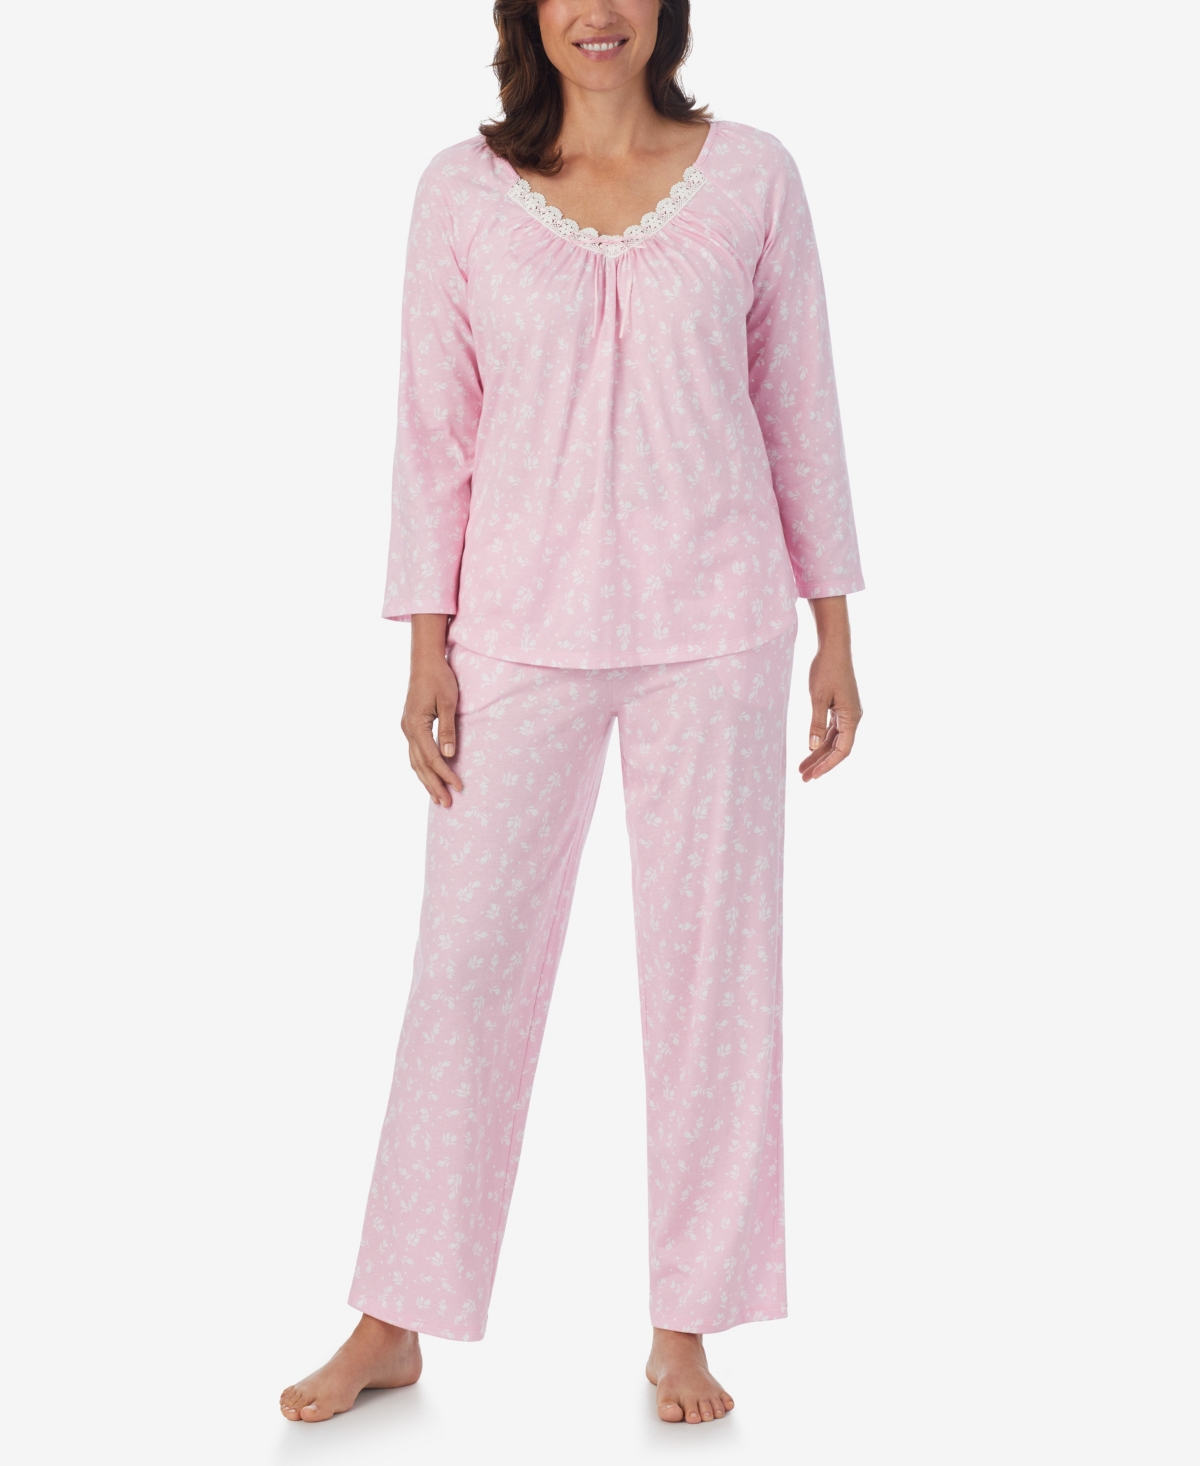 Women's 3/4 Sleeve Long Pant Pajama Set, 2 Piece - Pink, White Multi